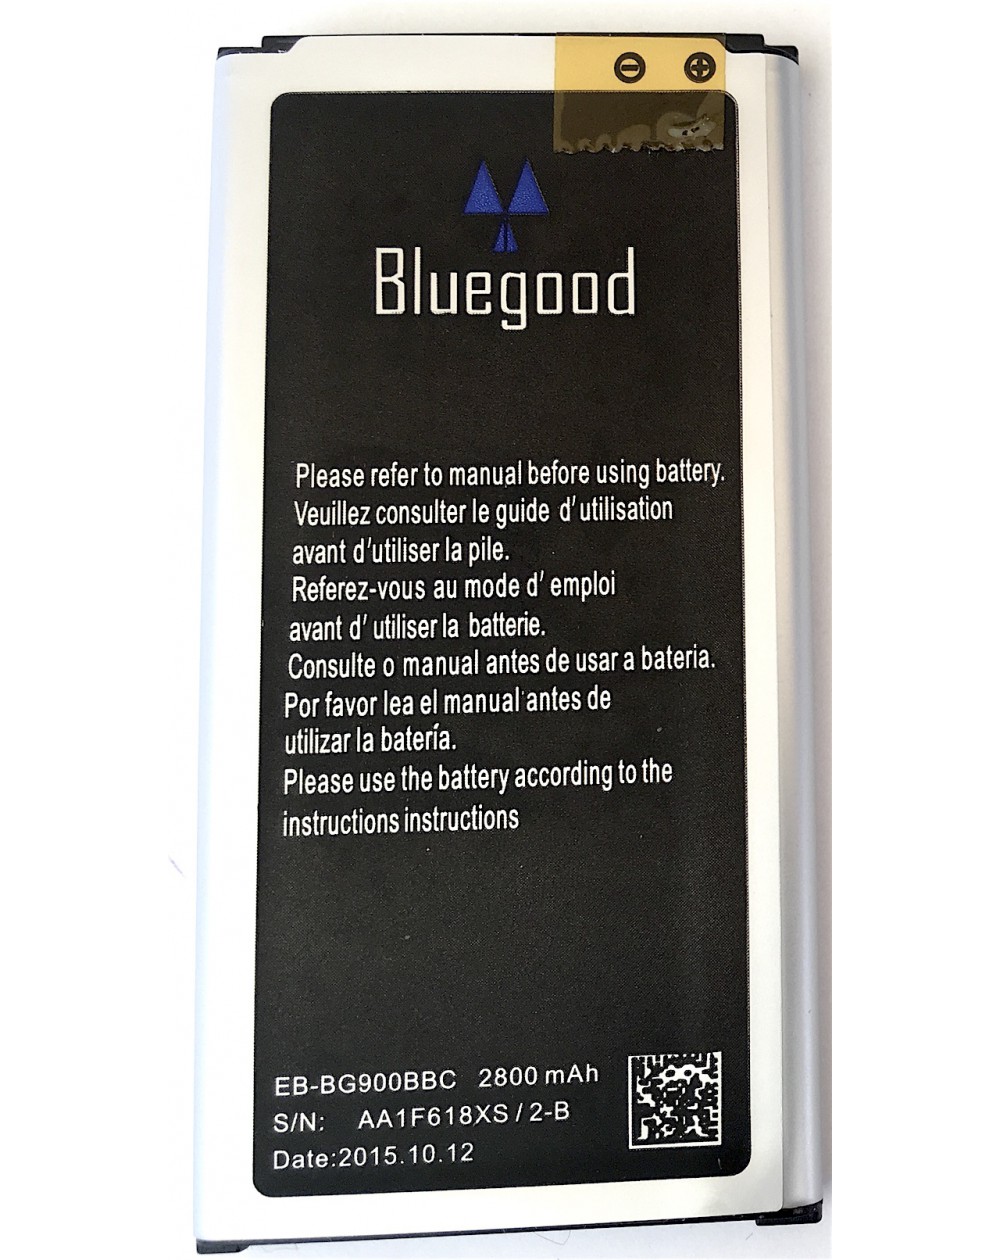 Batería Samsung Galaxy S5 i9600 Bluegood